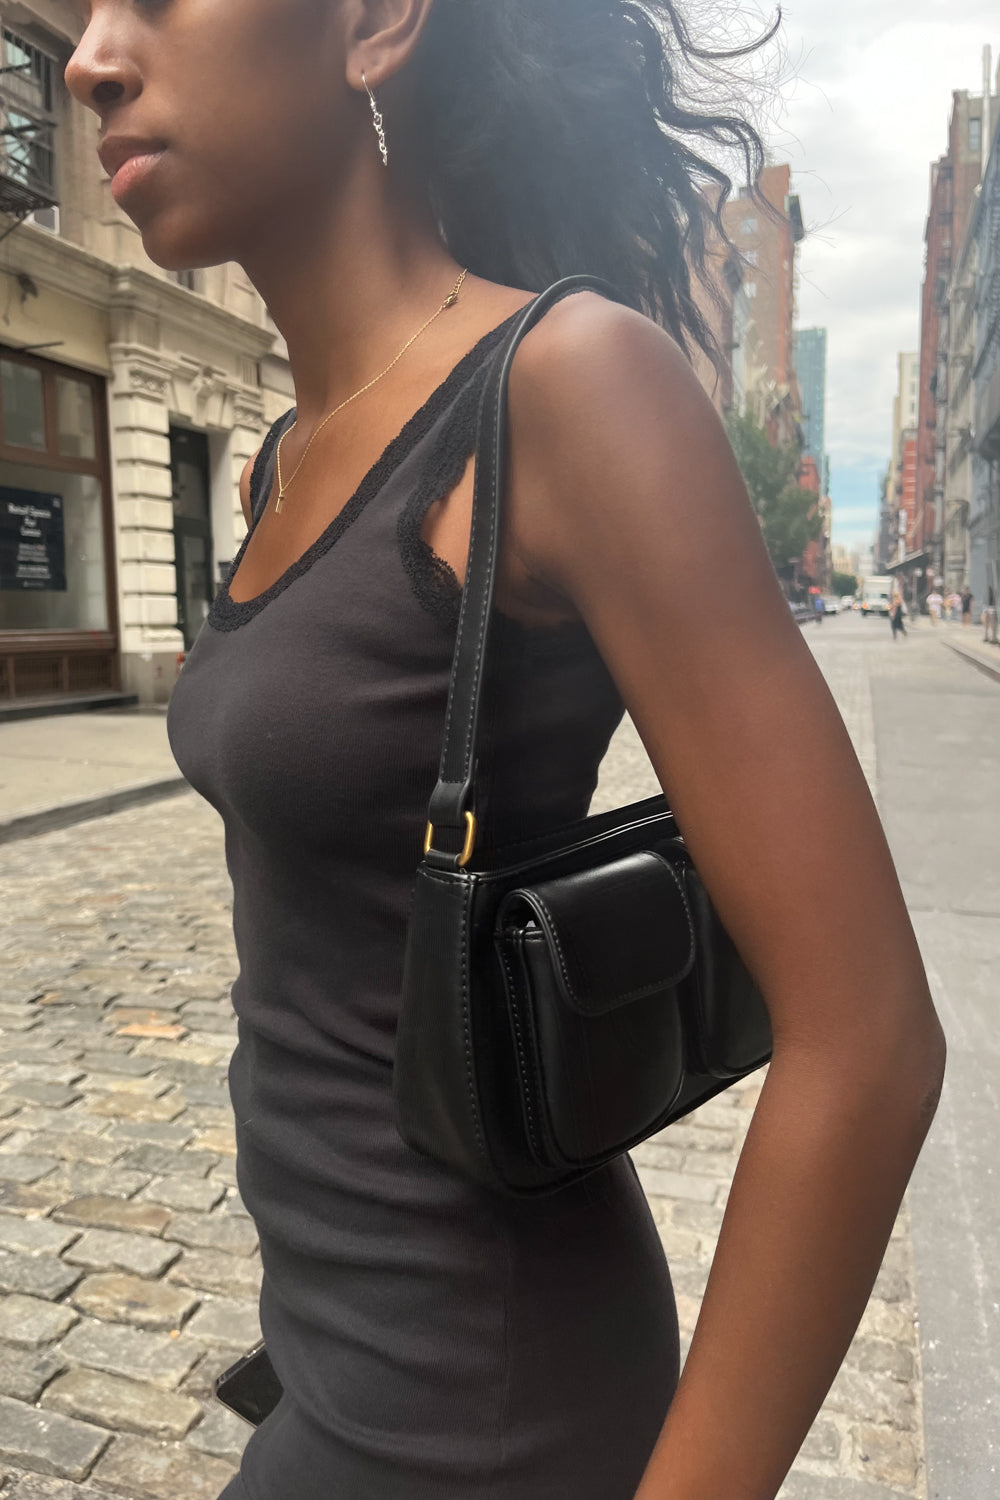 Brandy Melville bag black